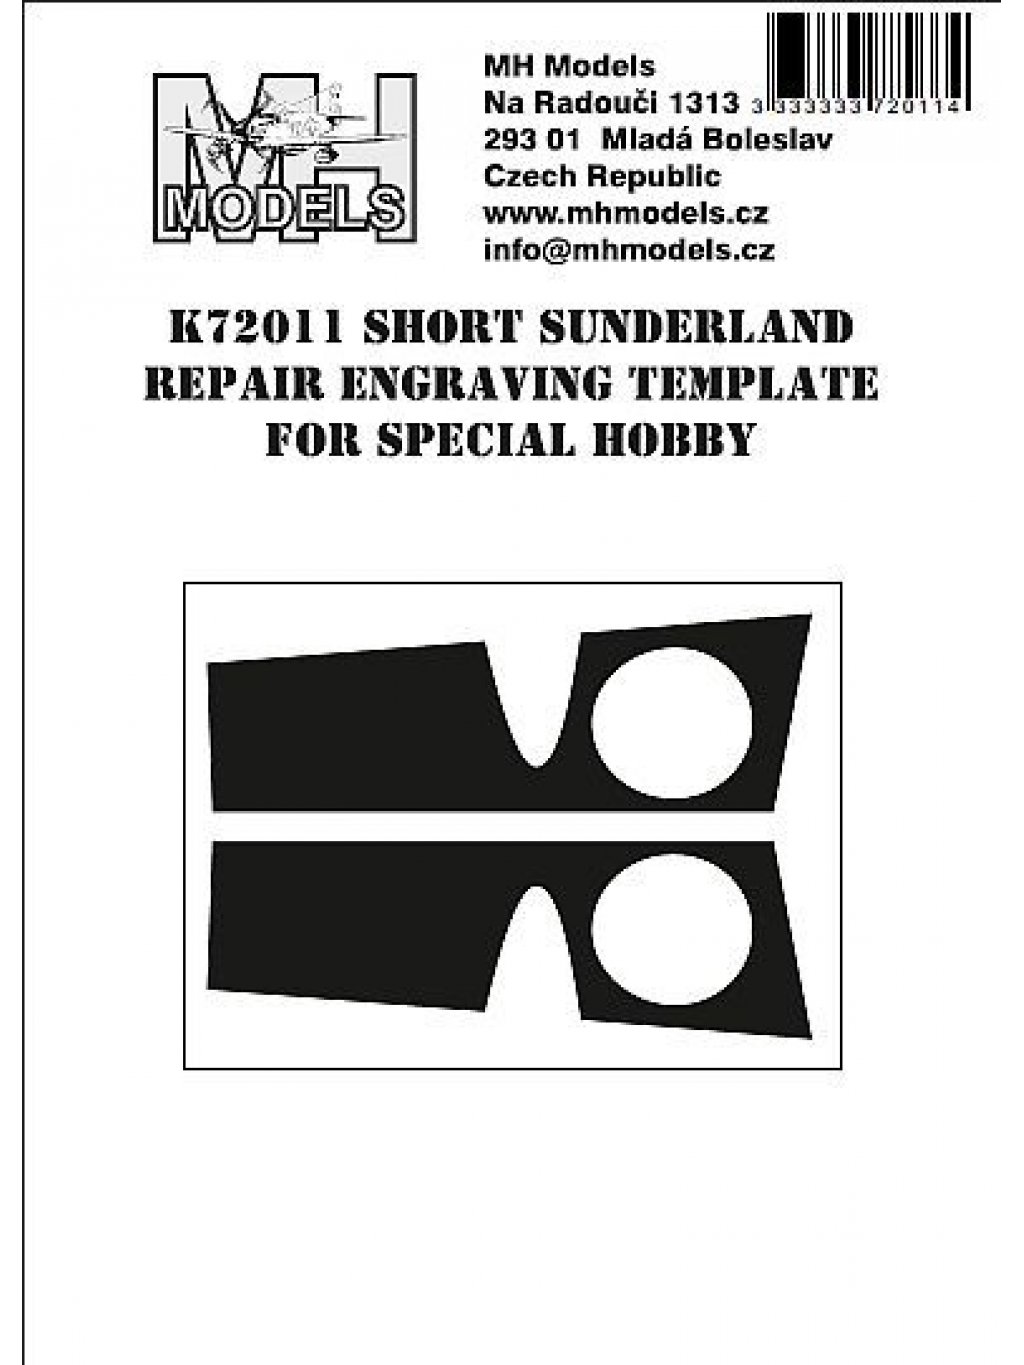 Short Sunderland repair engraving template for Special Hobby